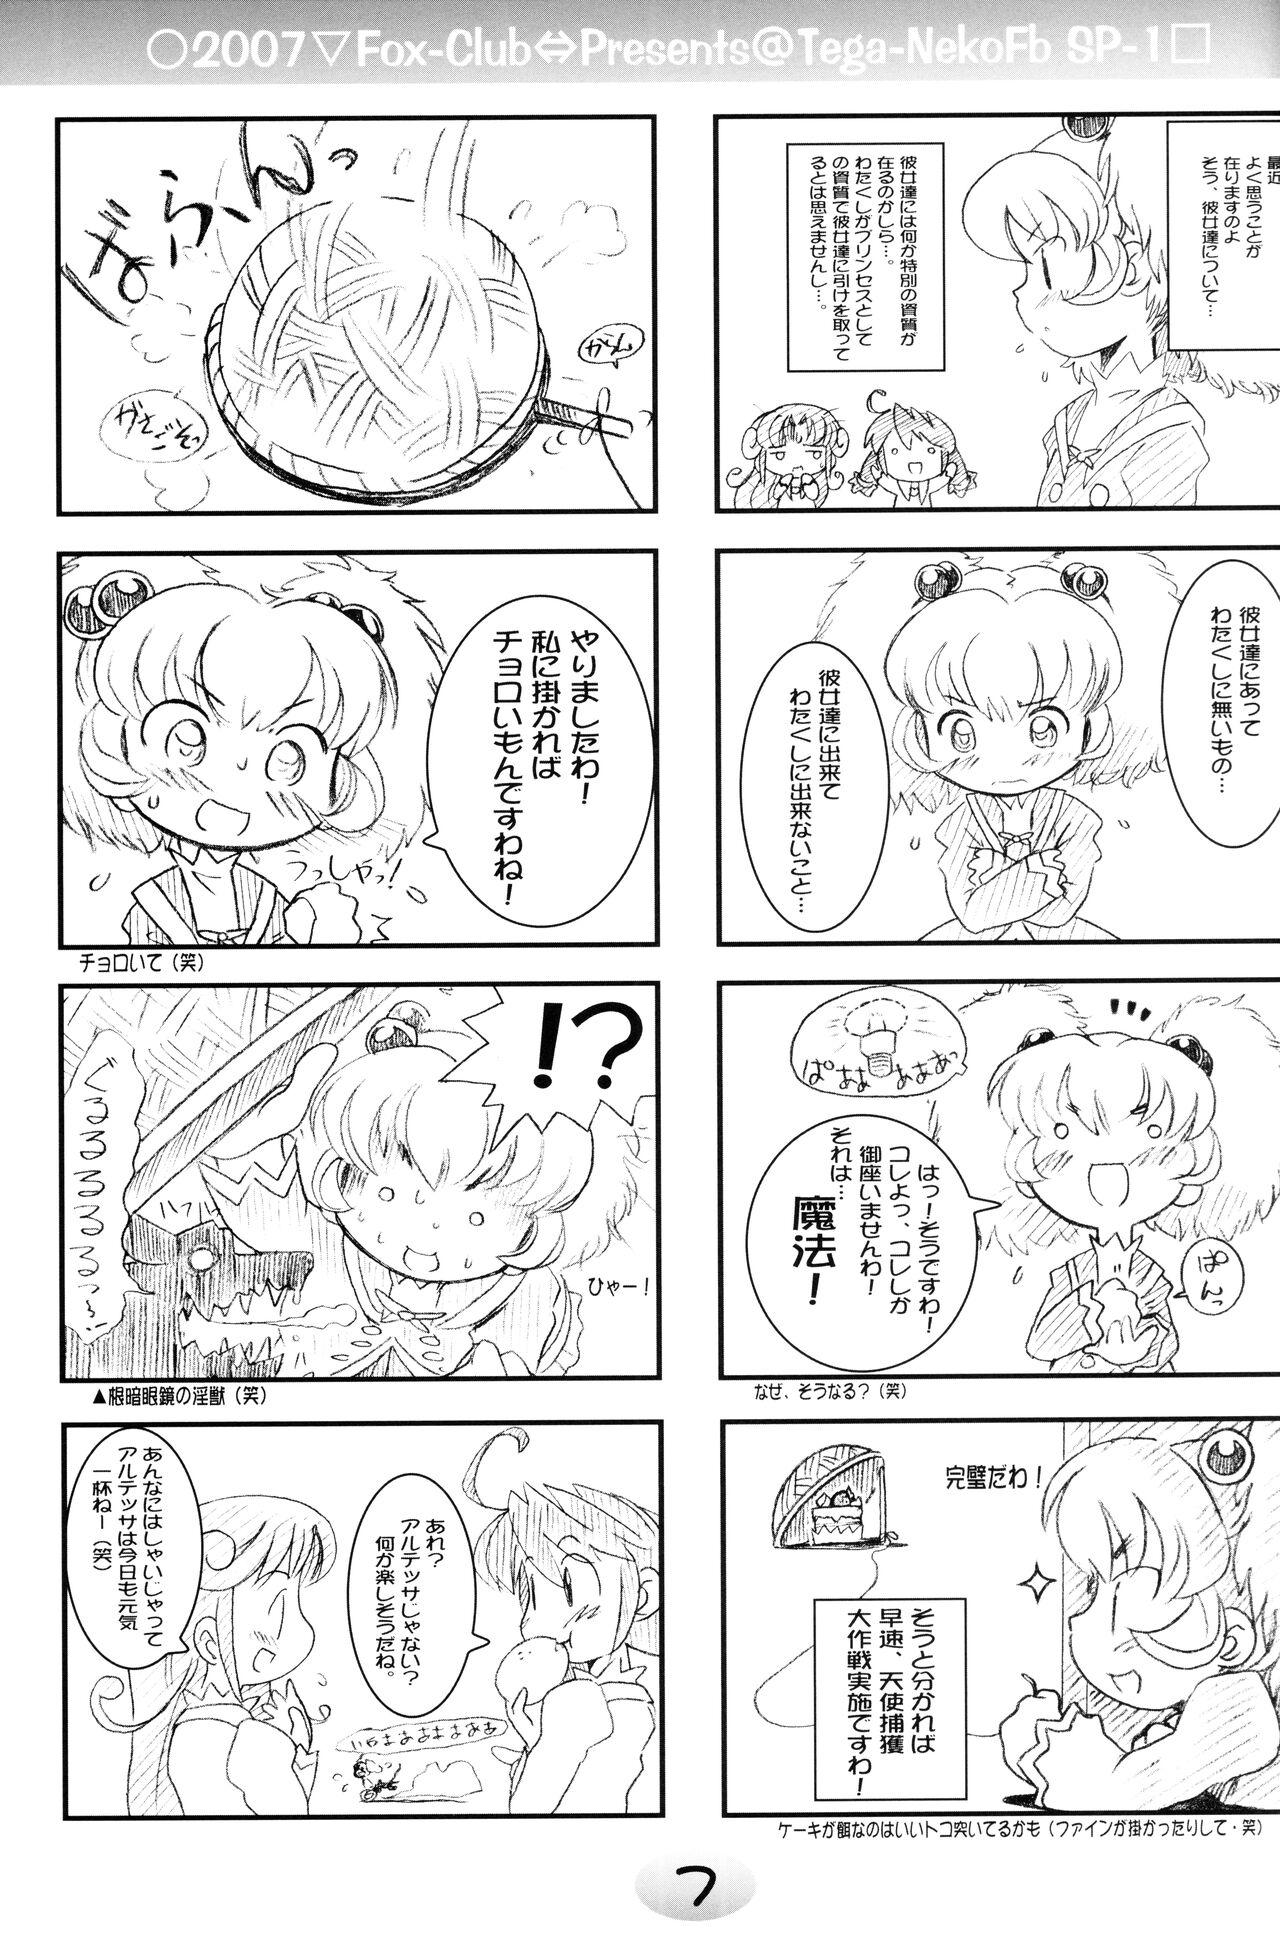 Blowing TeGa-NeKo Fb/SP Futago Hime Plus - Fushigiboshi no futagohime | twin princesses of the wonder planet Chat - Page 5